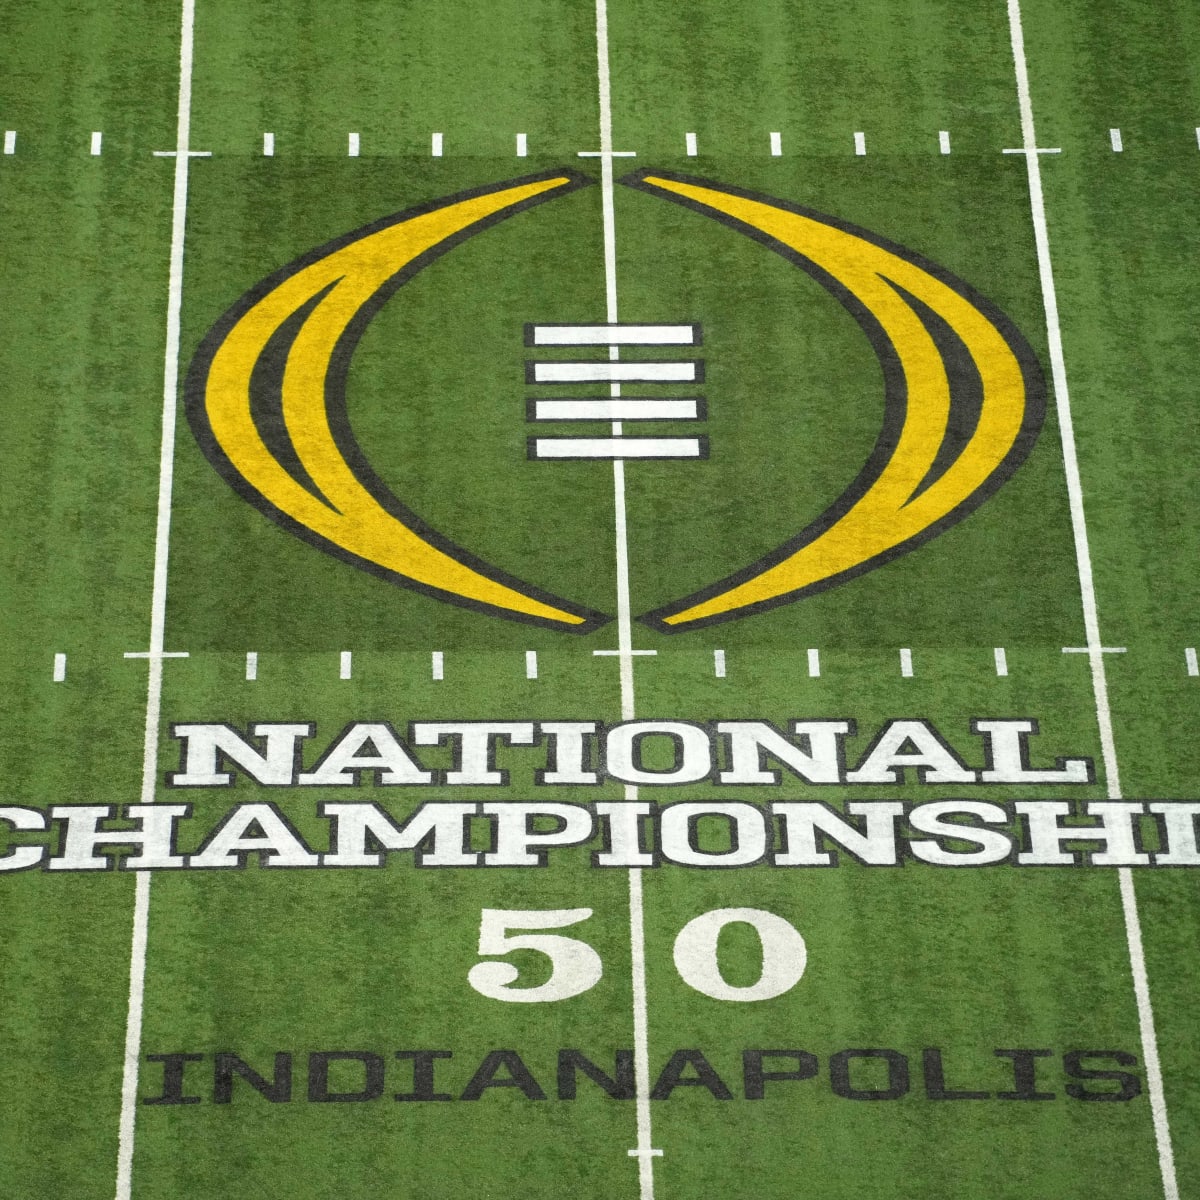 college football championship logo